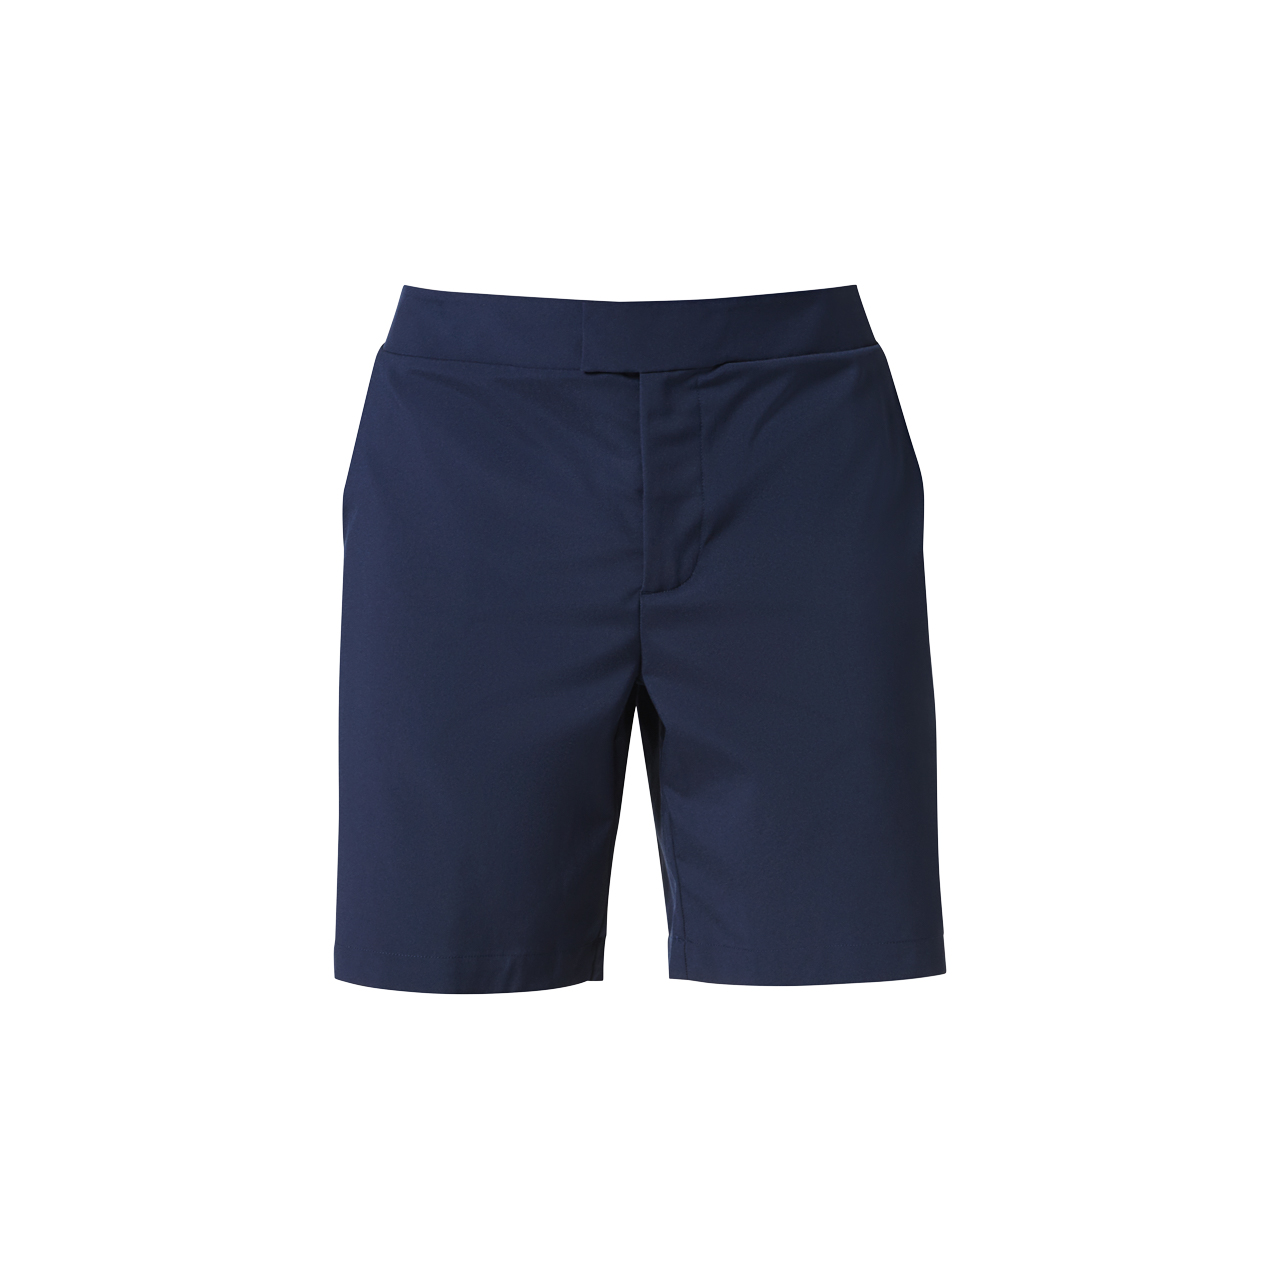 Men's short pants in cotton jersey Effepi 212111 - Effepi